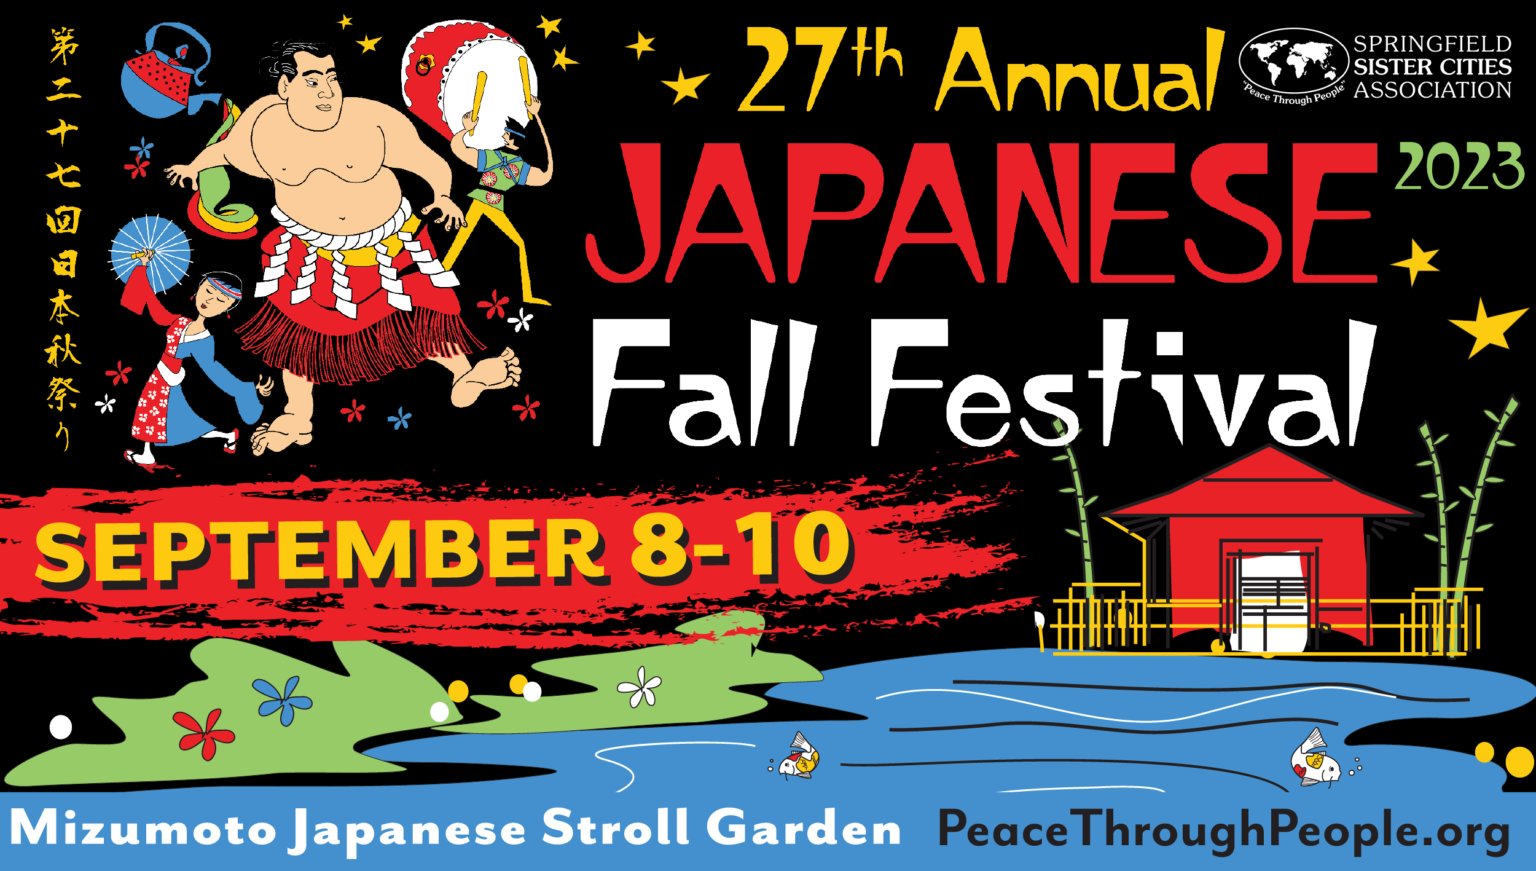 Japanese Fall Festival Springfield Sister Cities Association